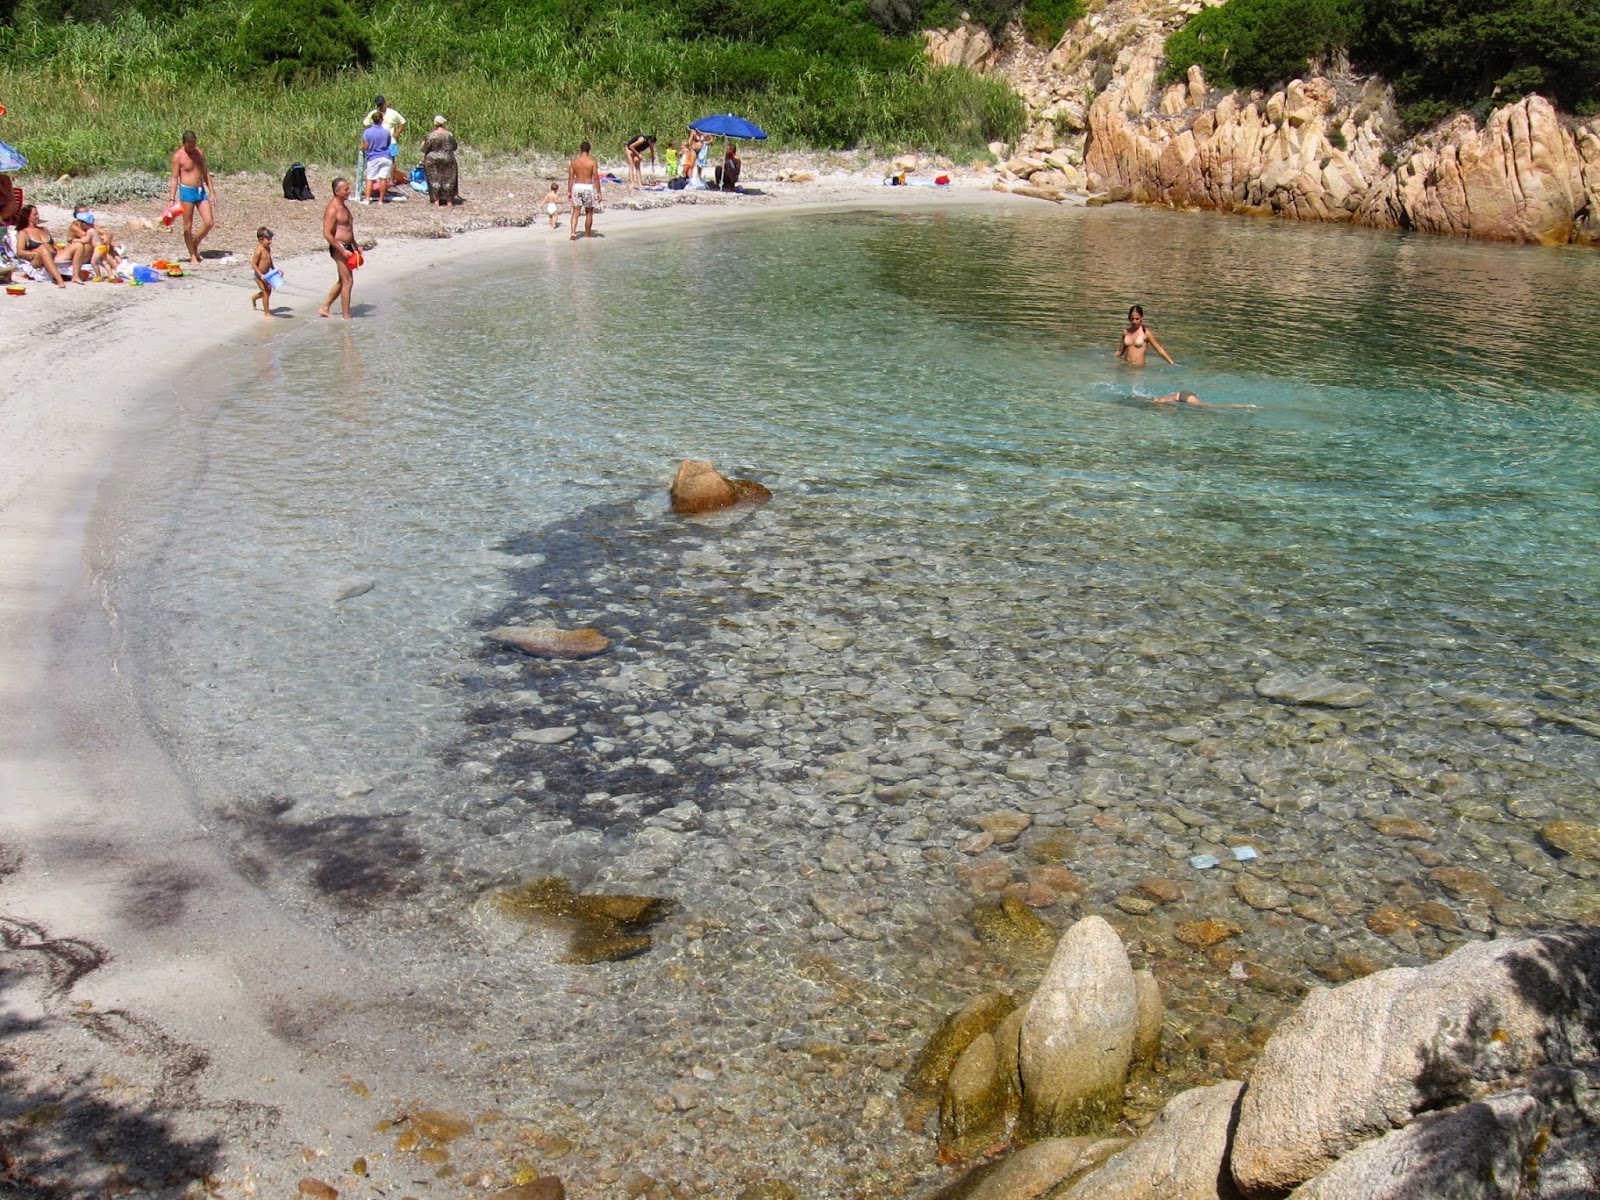 Photo of Cala Lunga beach amenities area